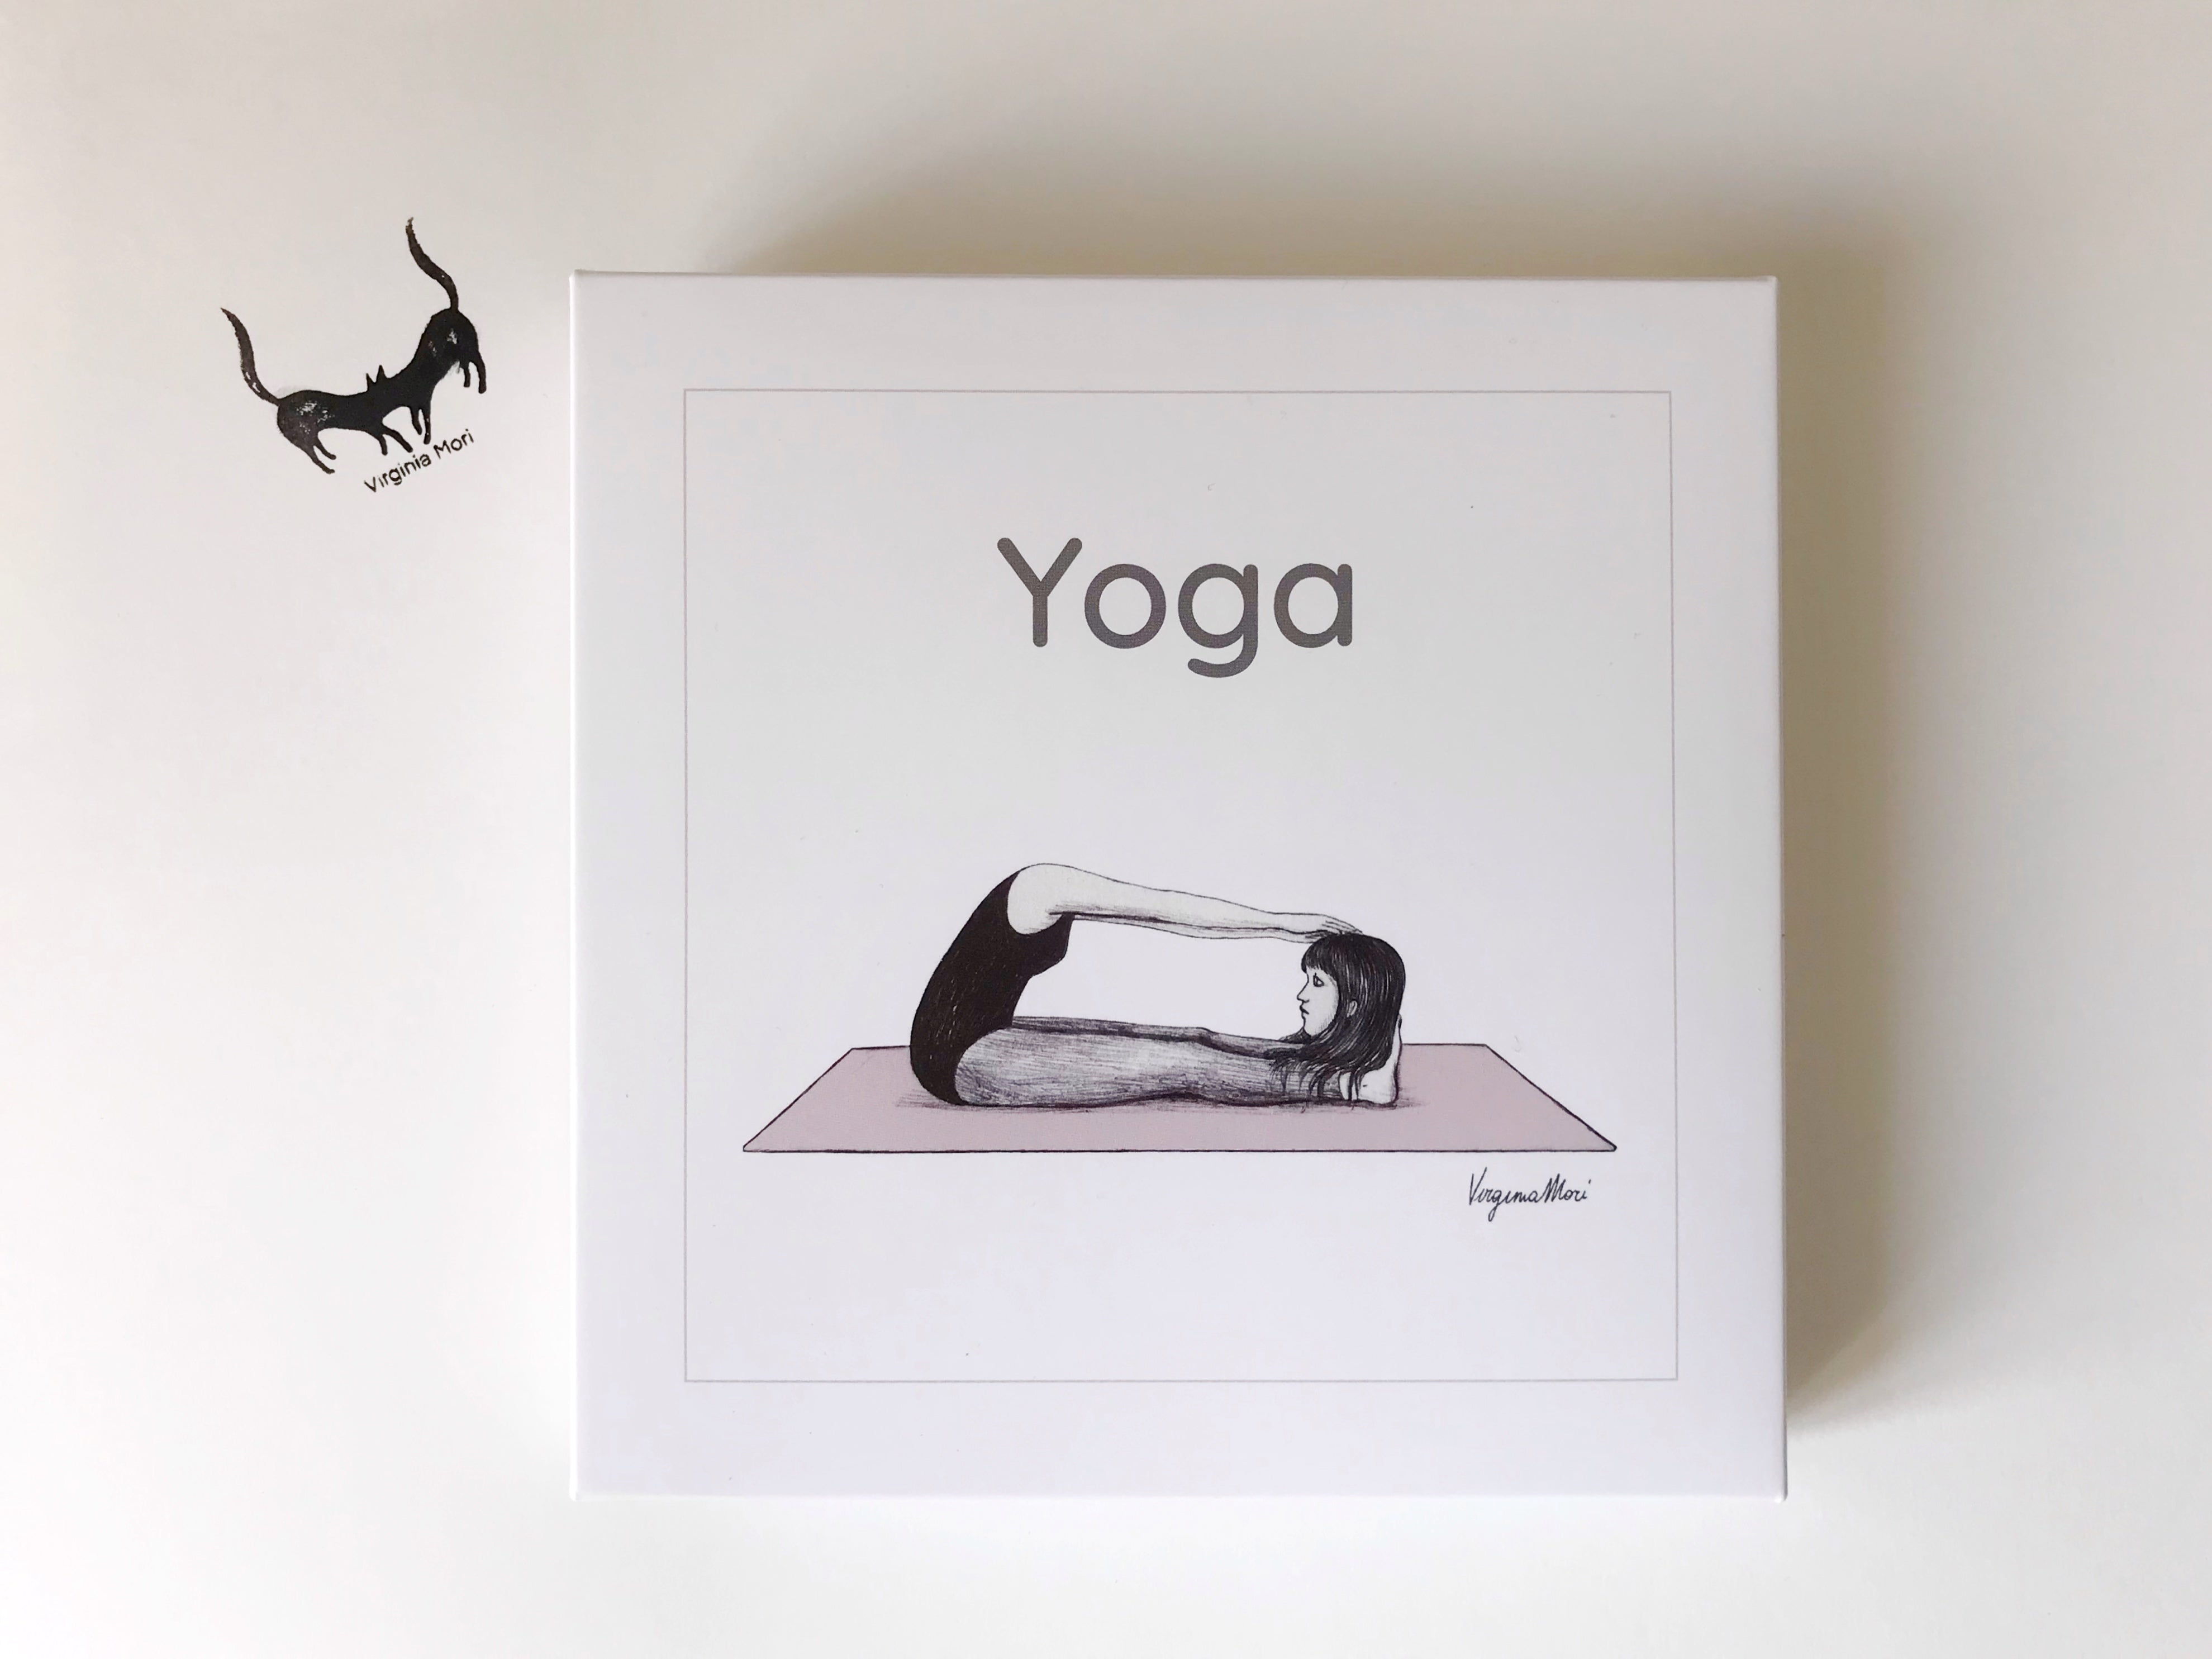 Yoga cards